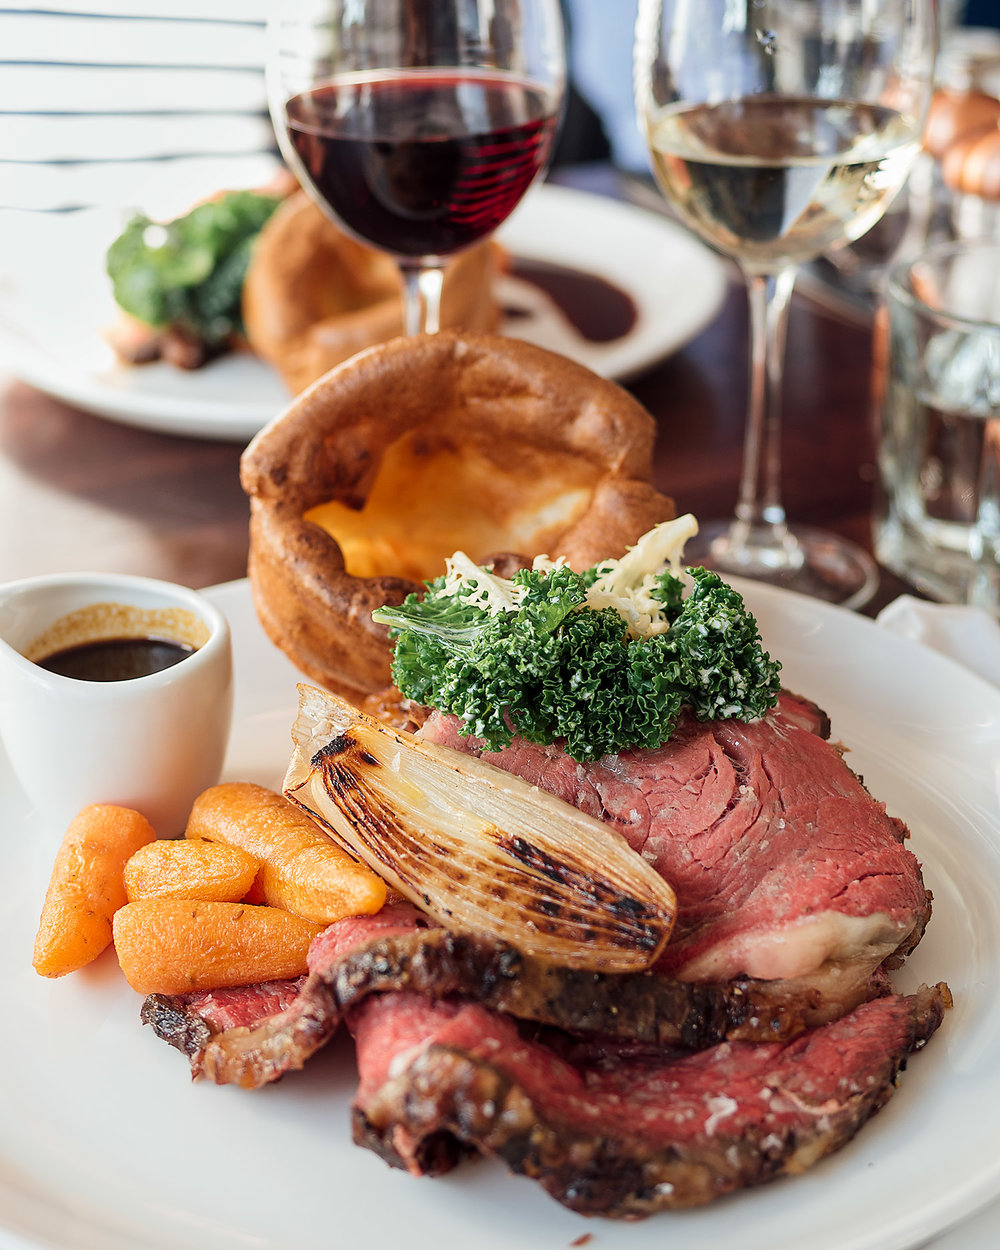 The main event, Sunday roast beef at Orto restaurant, Edinburgh